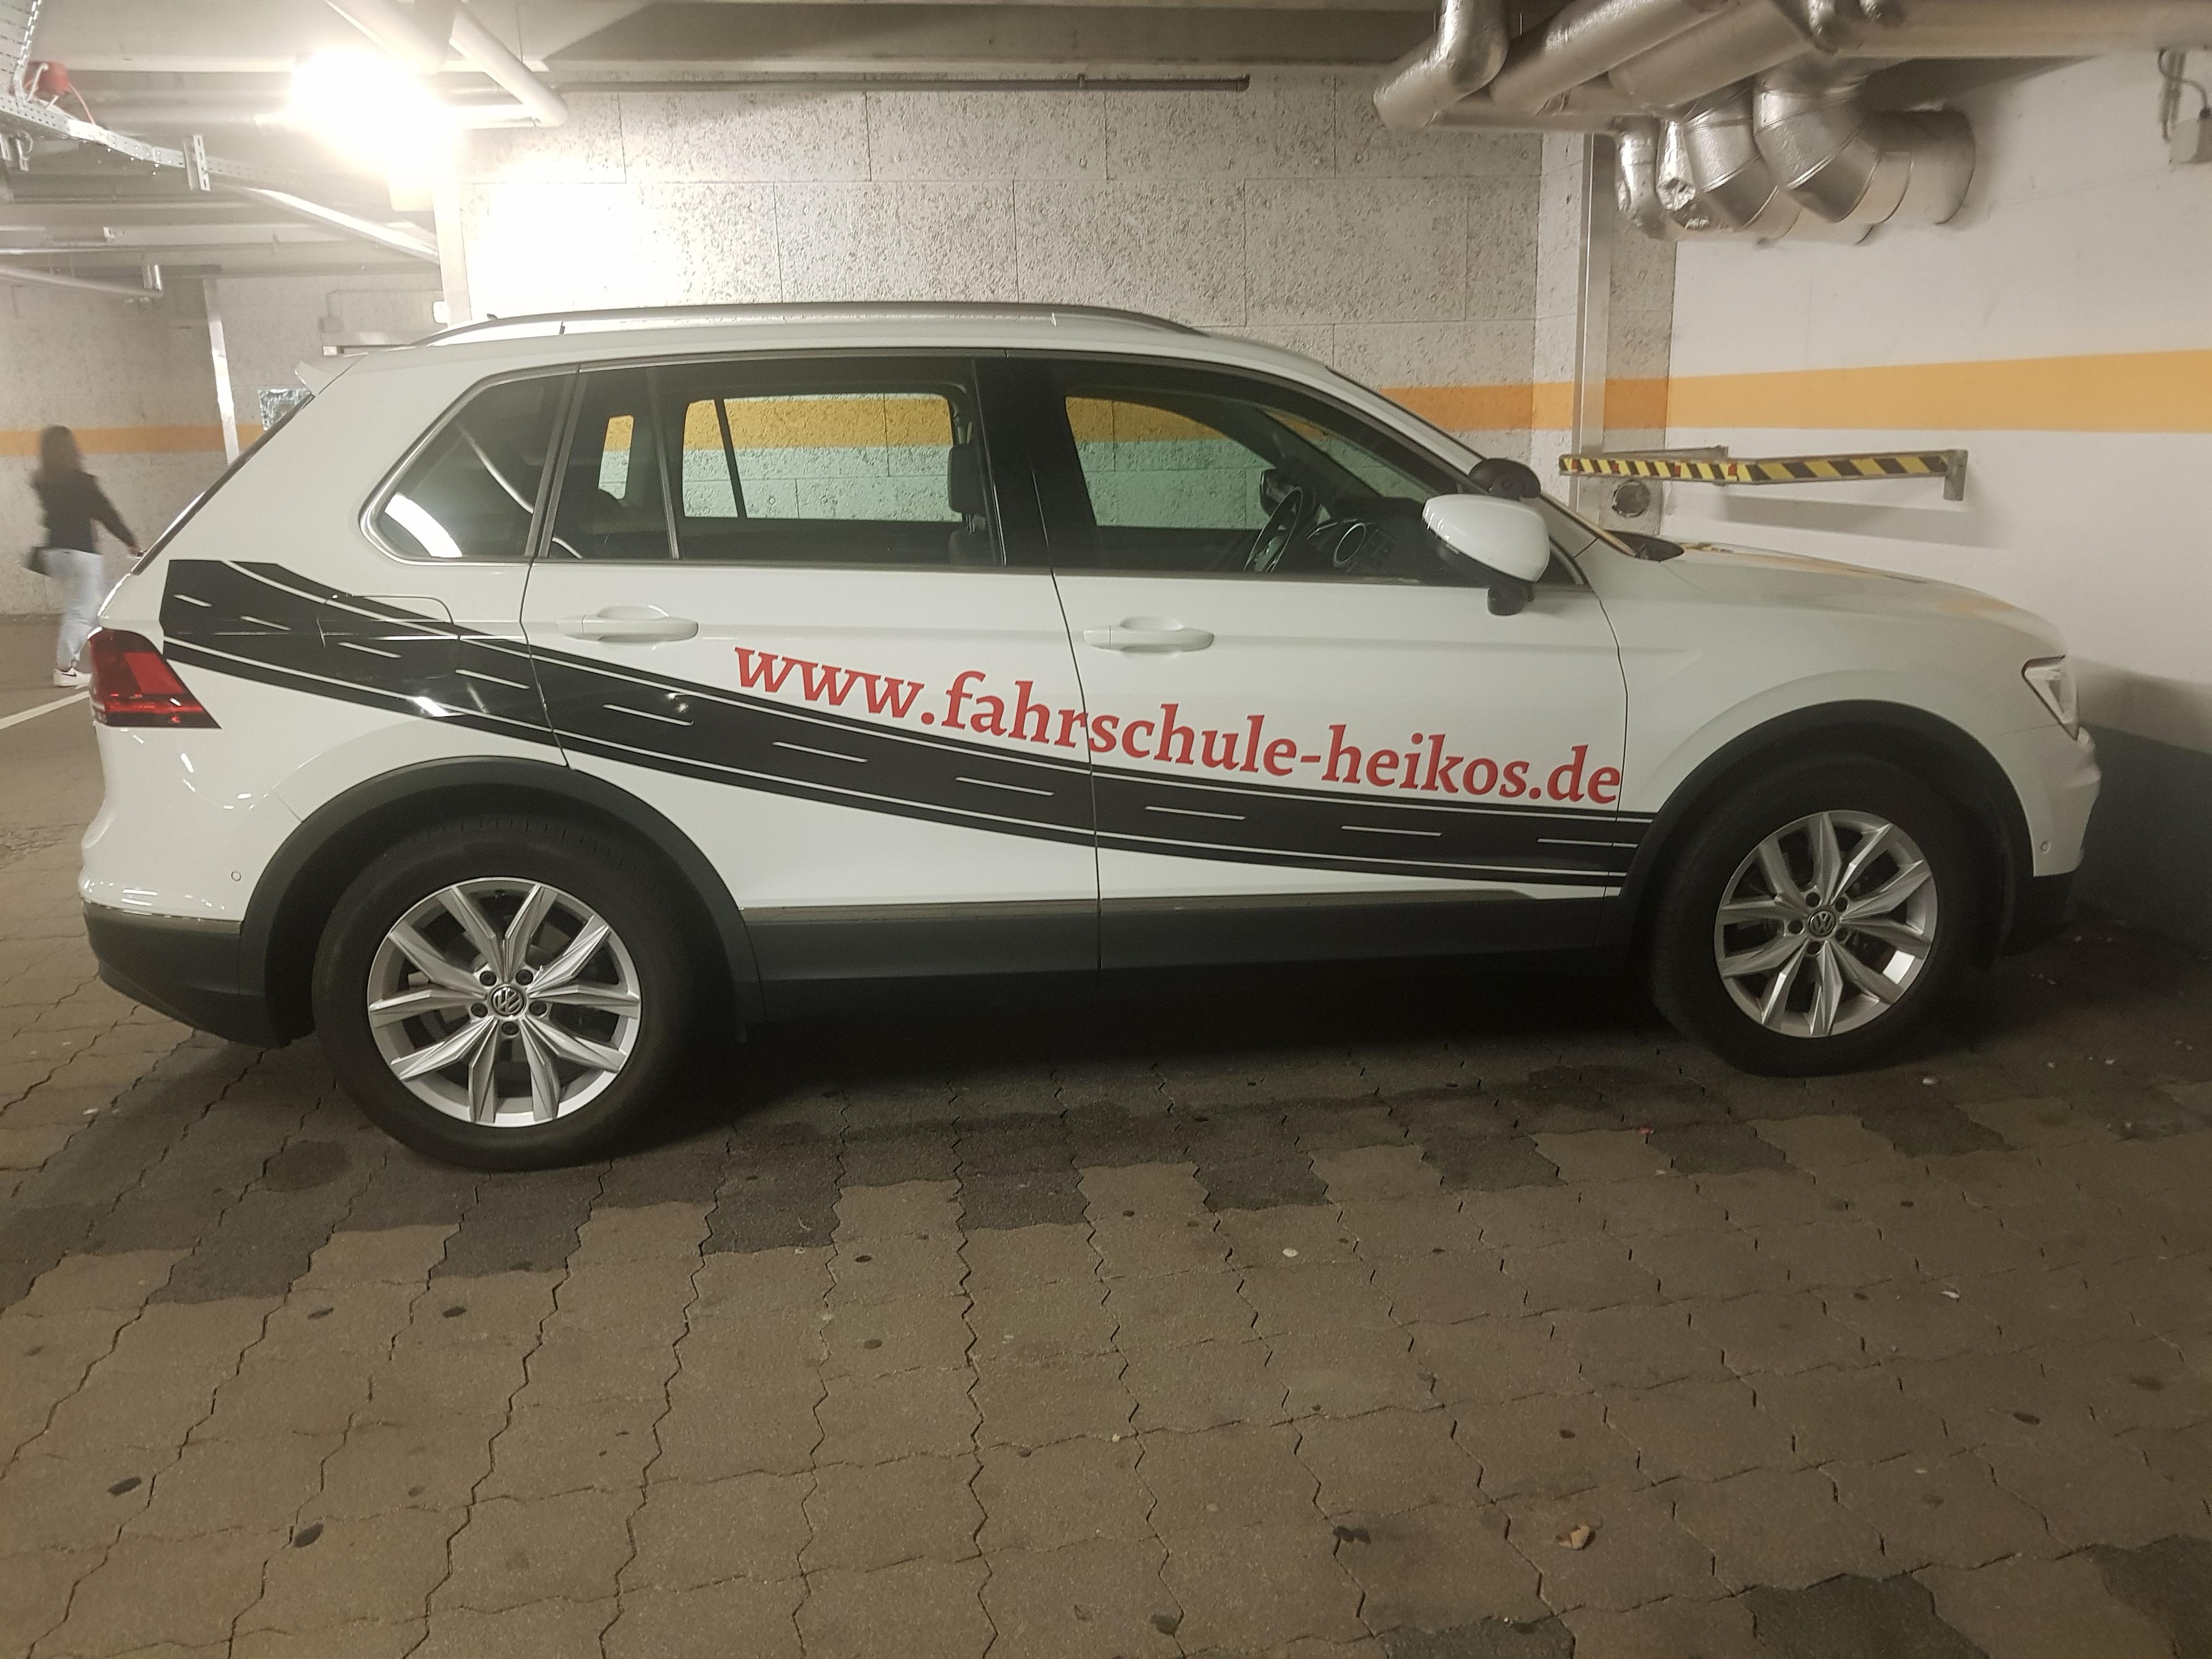 Fahrschulauto_Tiguan_ Heiko's Fahrschule | Fahrtraining Führerschein Auto | Perlach München